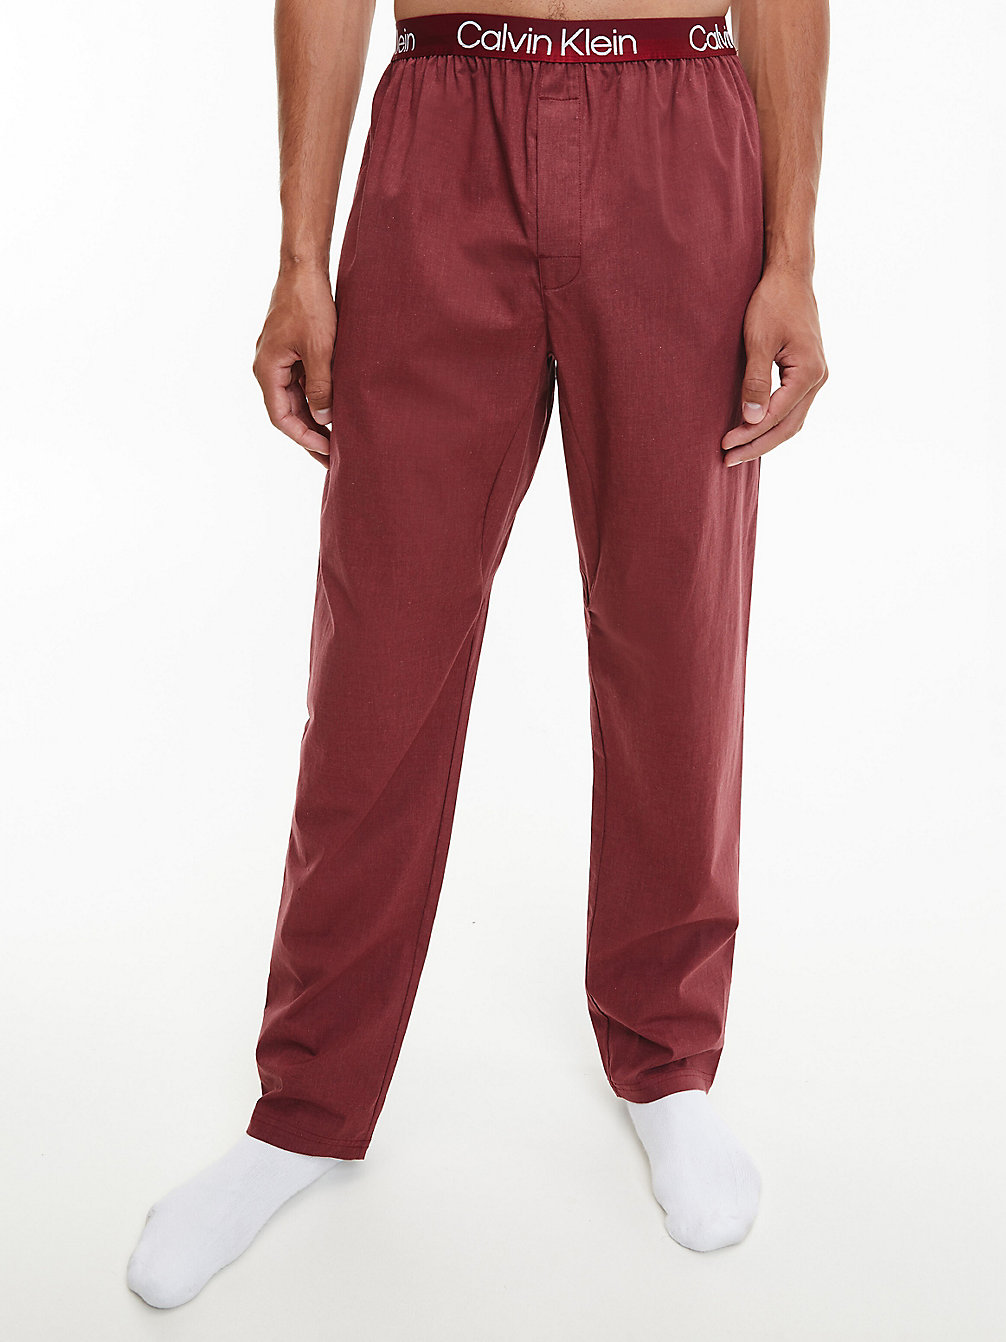 Pantaloni Pigiama - Modern Structure > RED CARPET HEATHER > undefined uomo > Calvin Klein